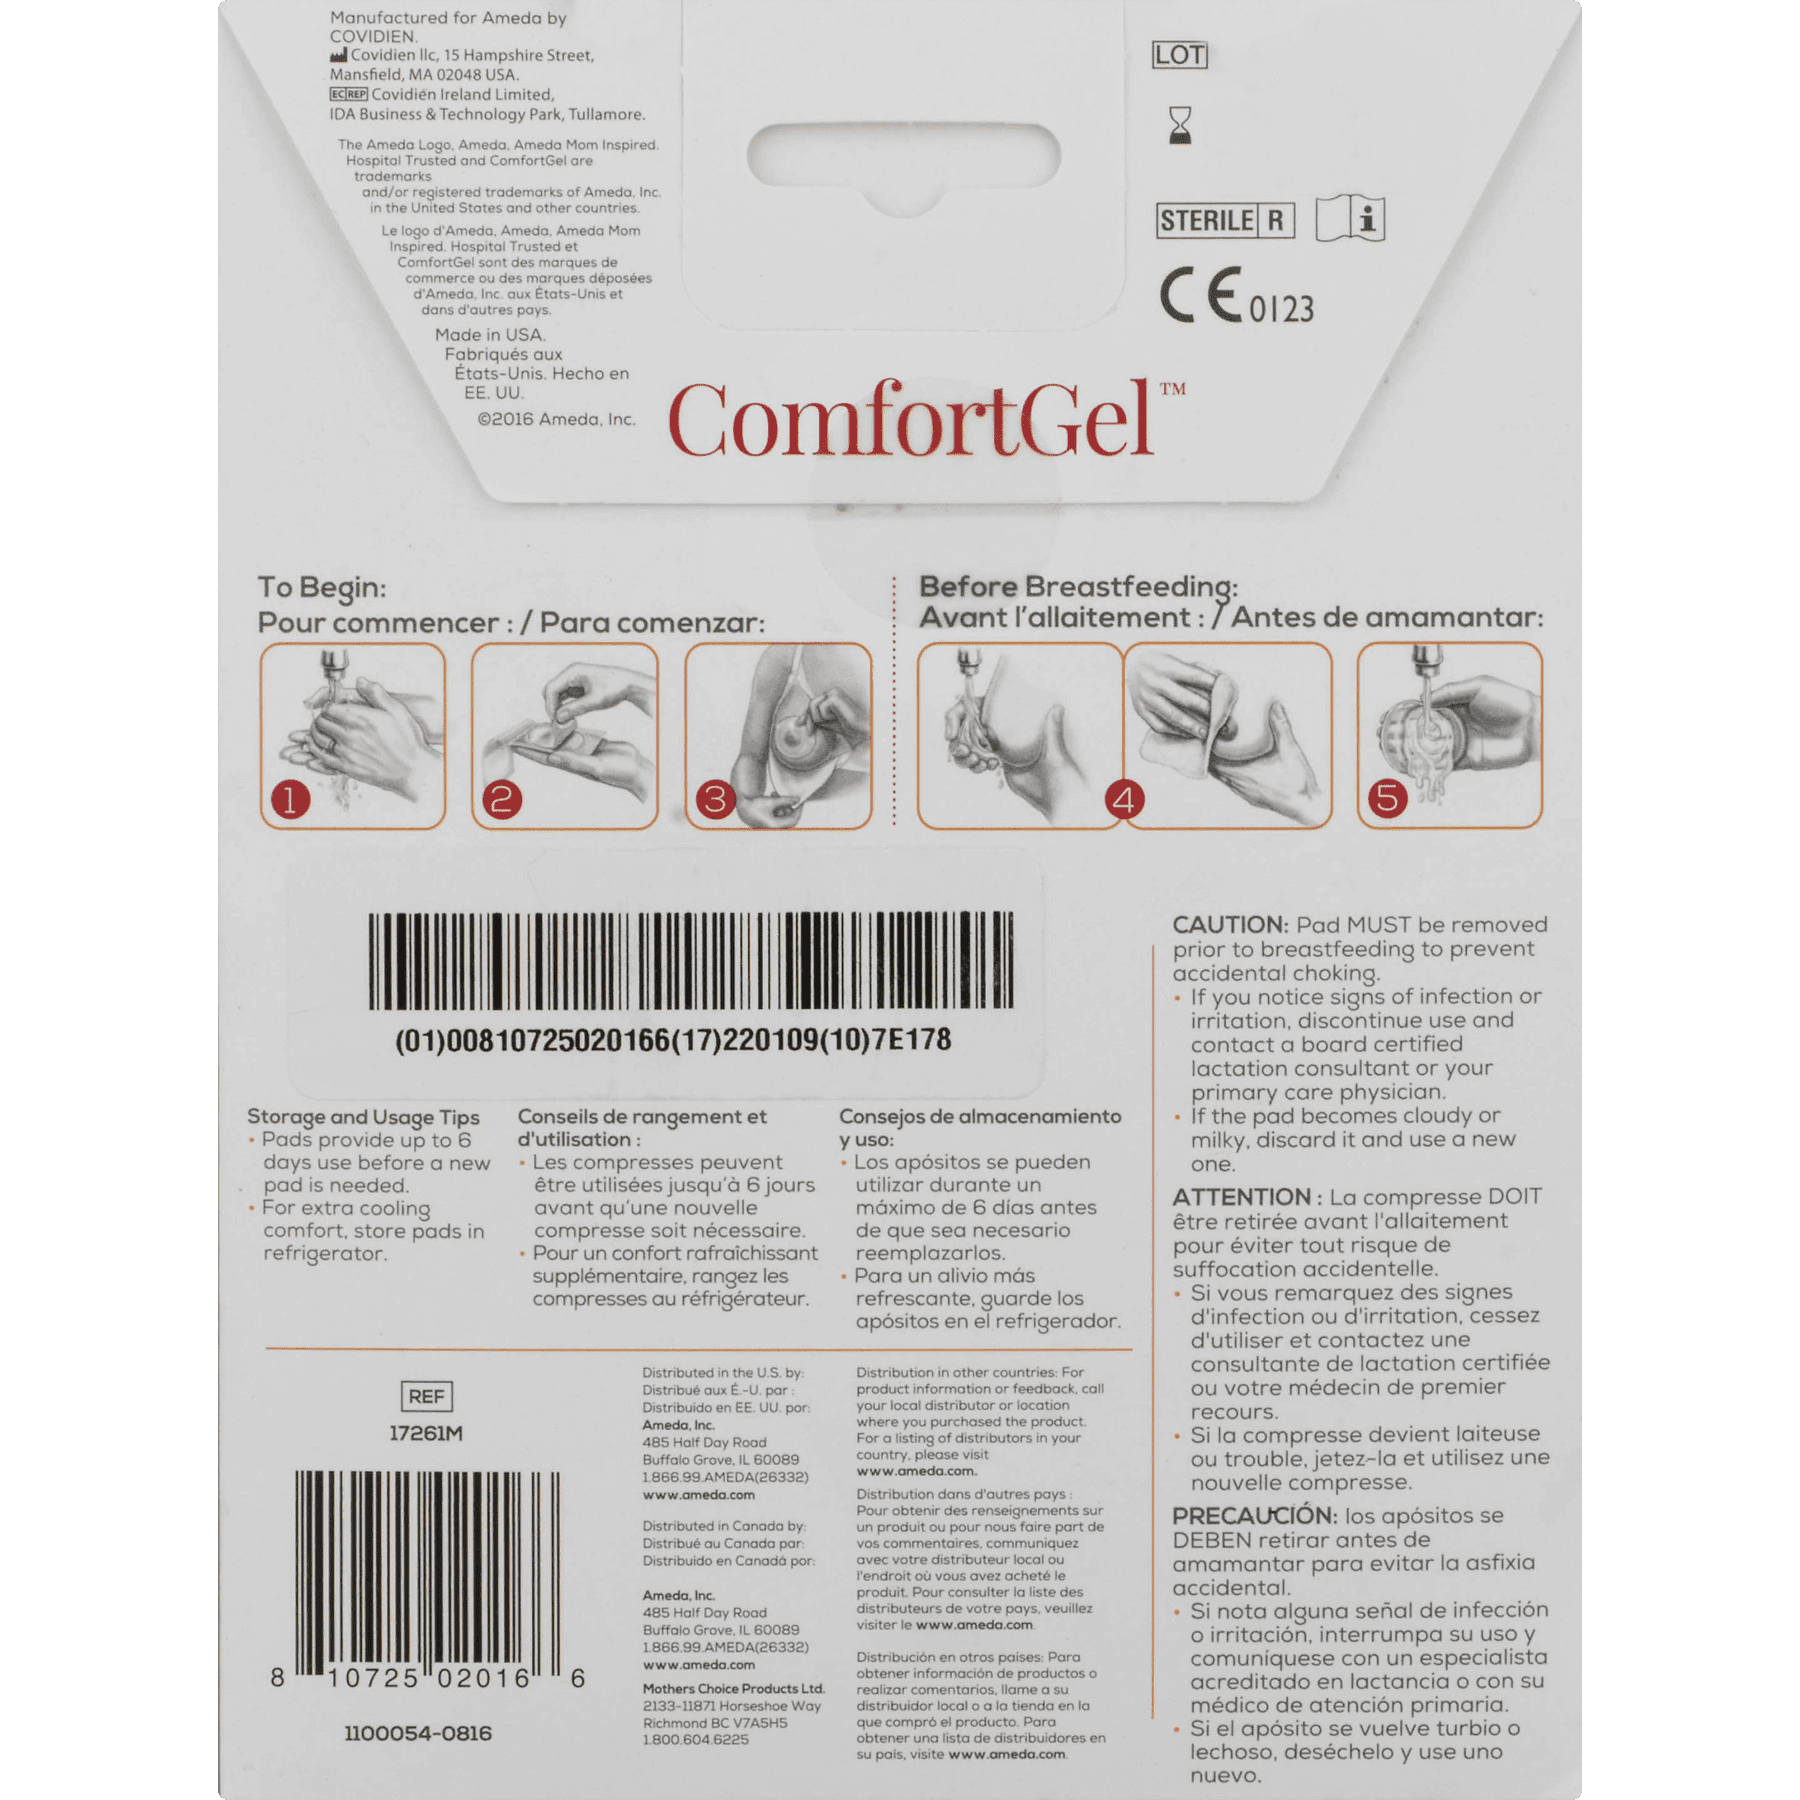 Ameda EW17261M ComfortGEL Hydrogel Nipple Pad